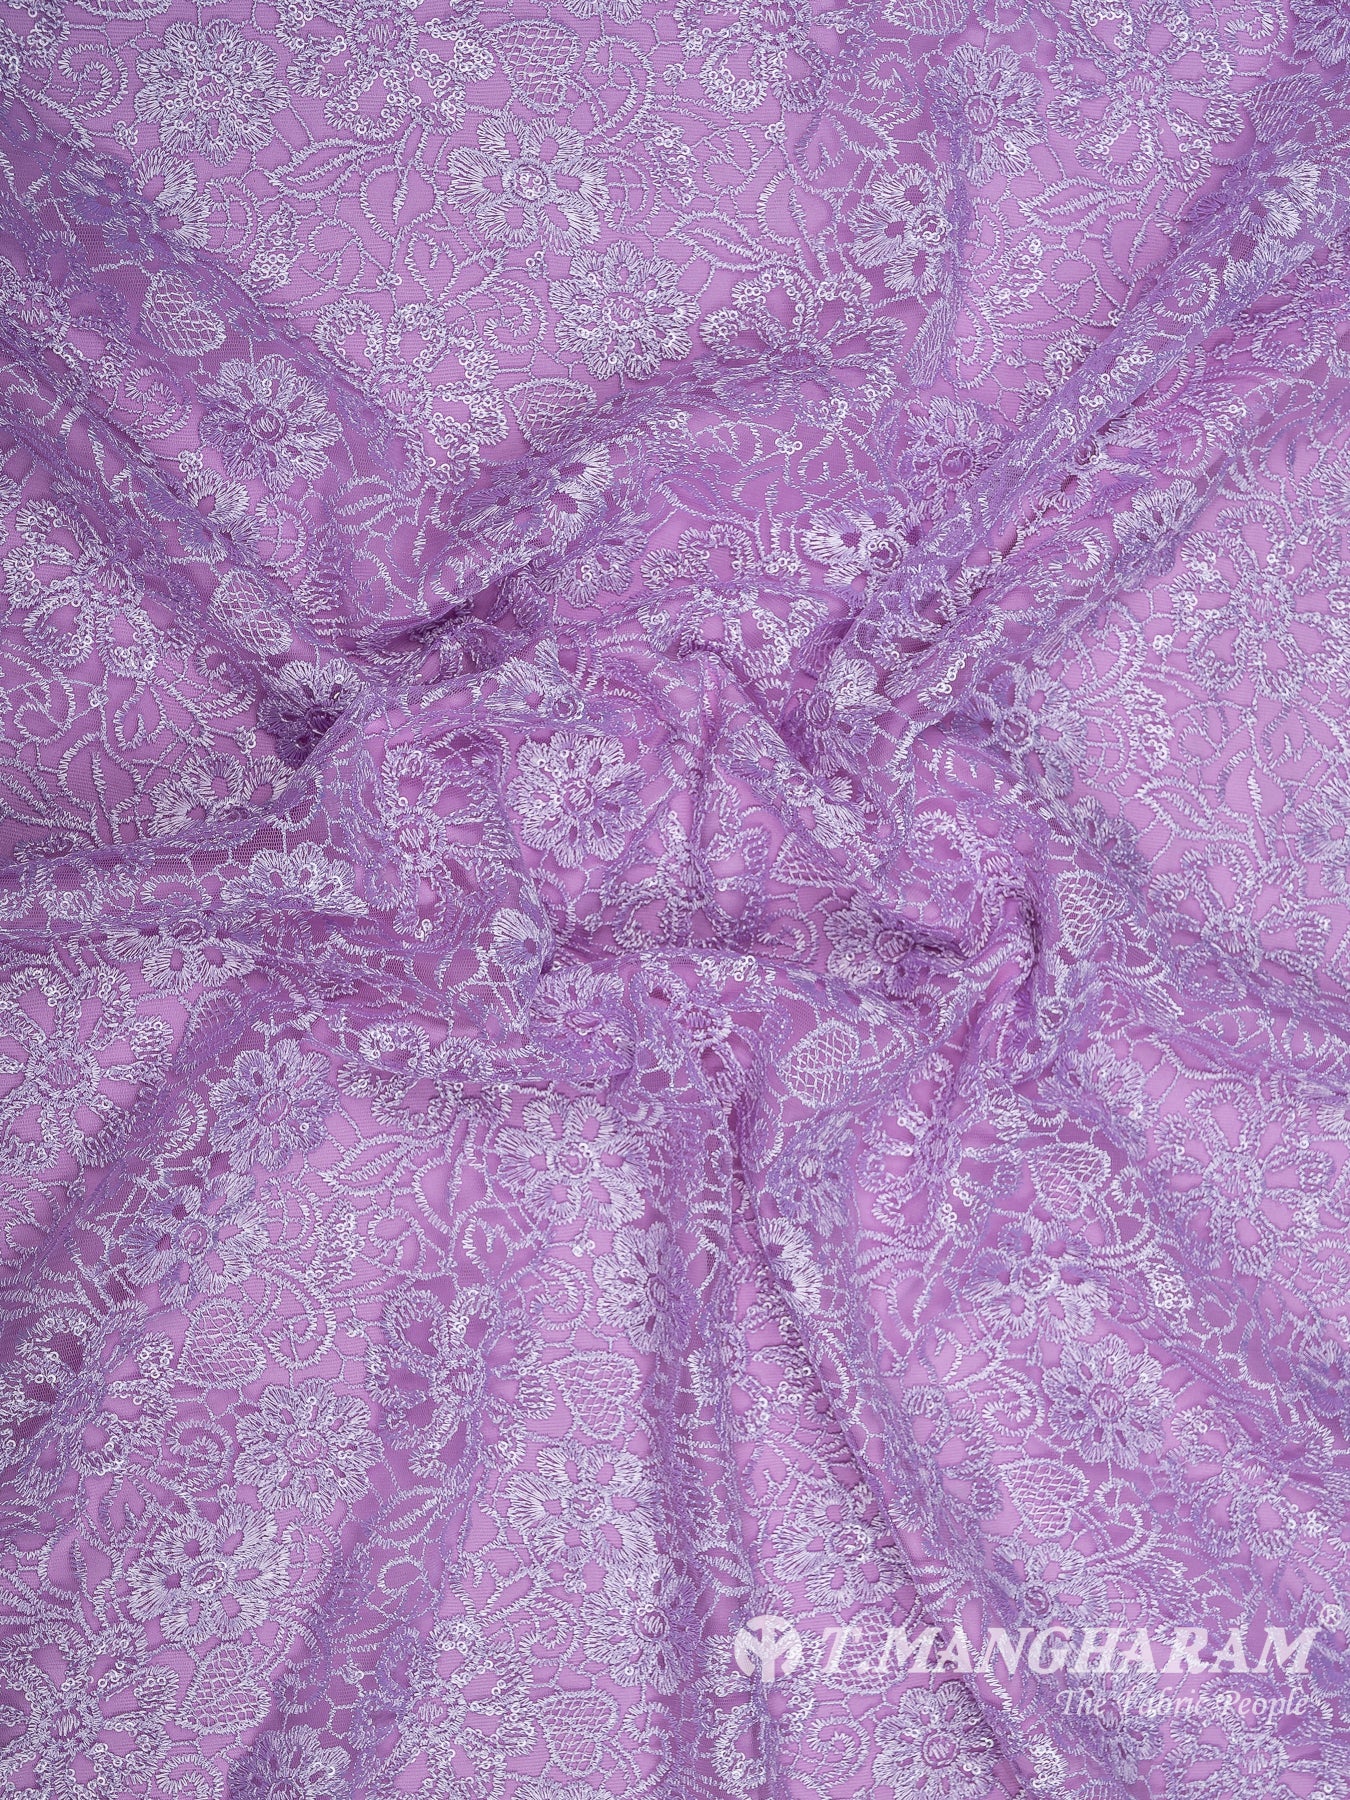 Violet Fancy Net Fabric - EB5798 view-4